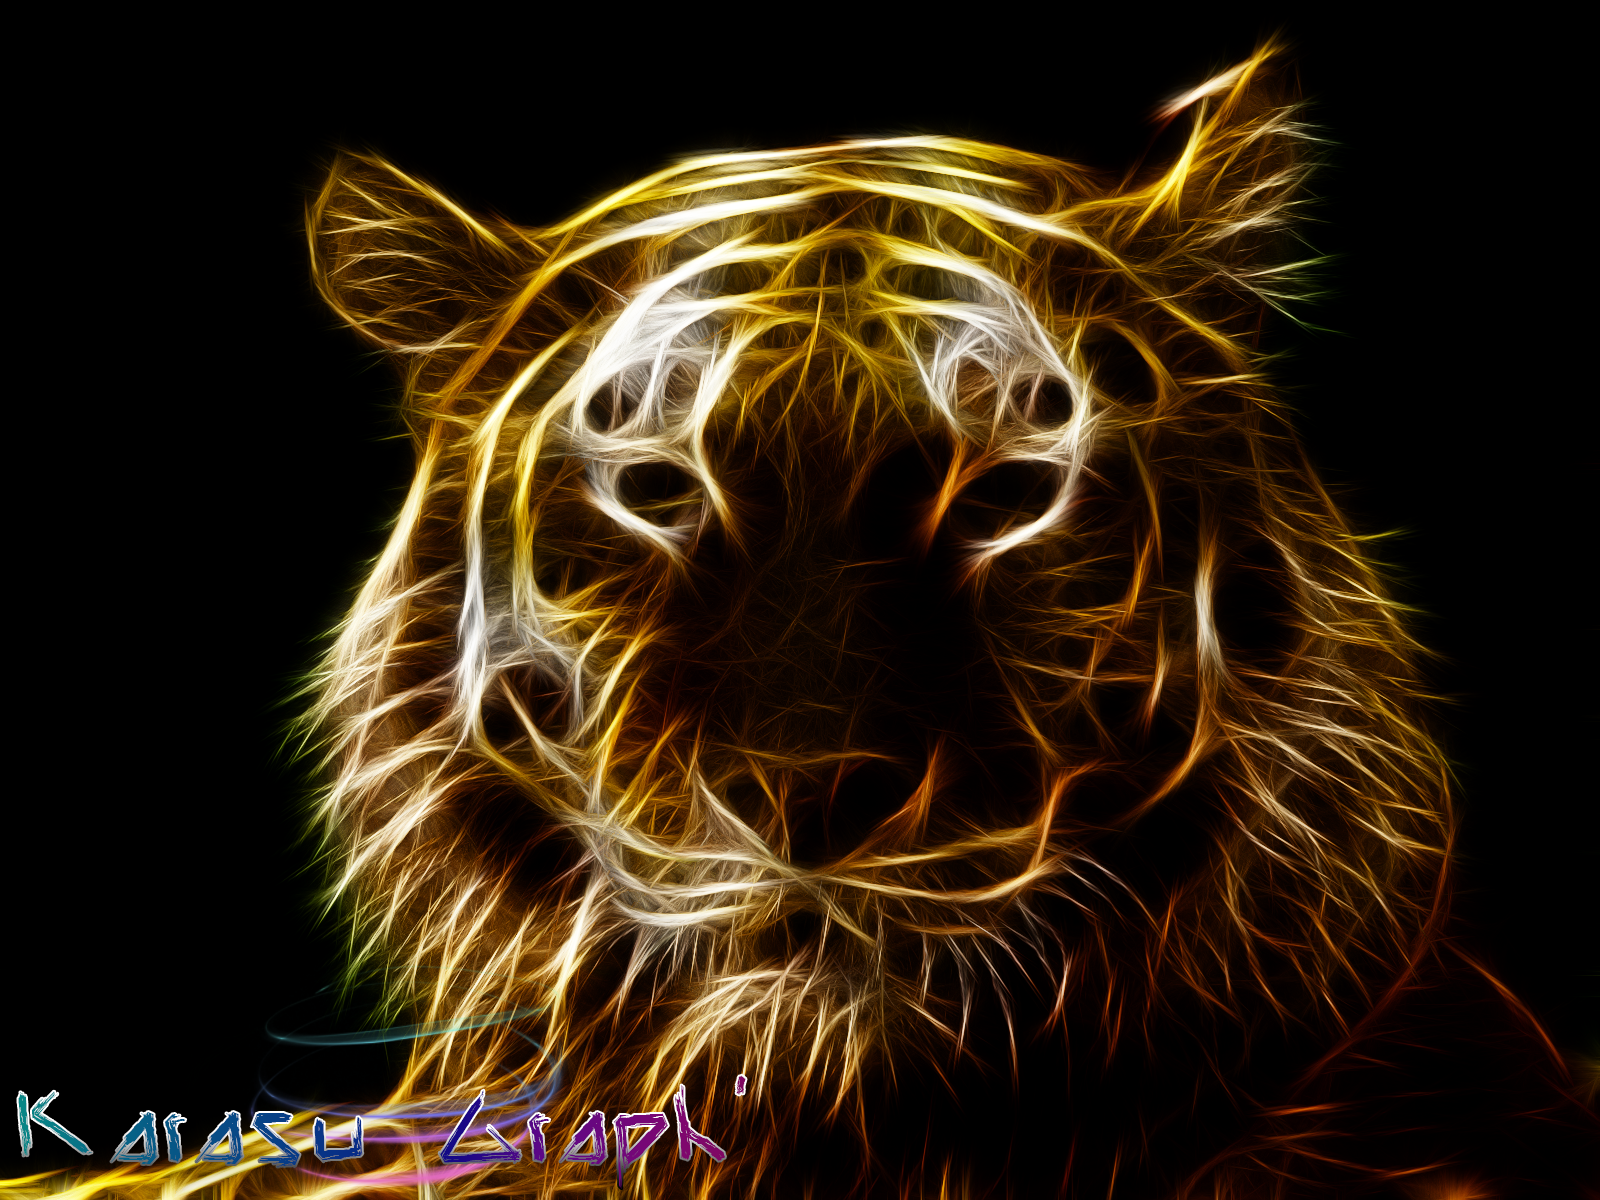 [46+] Abstract Tiger Wallpaper | WallpaperSafari.com